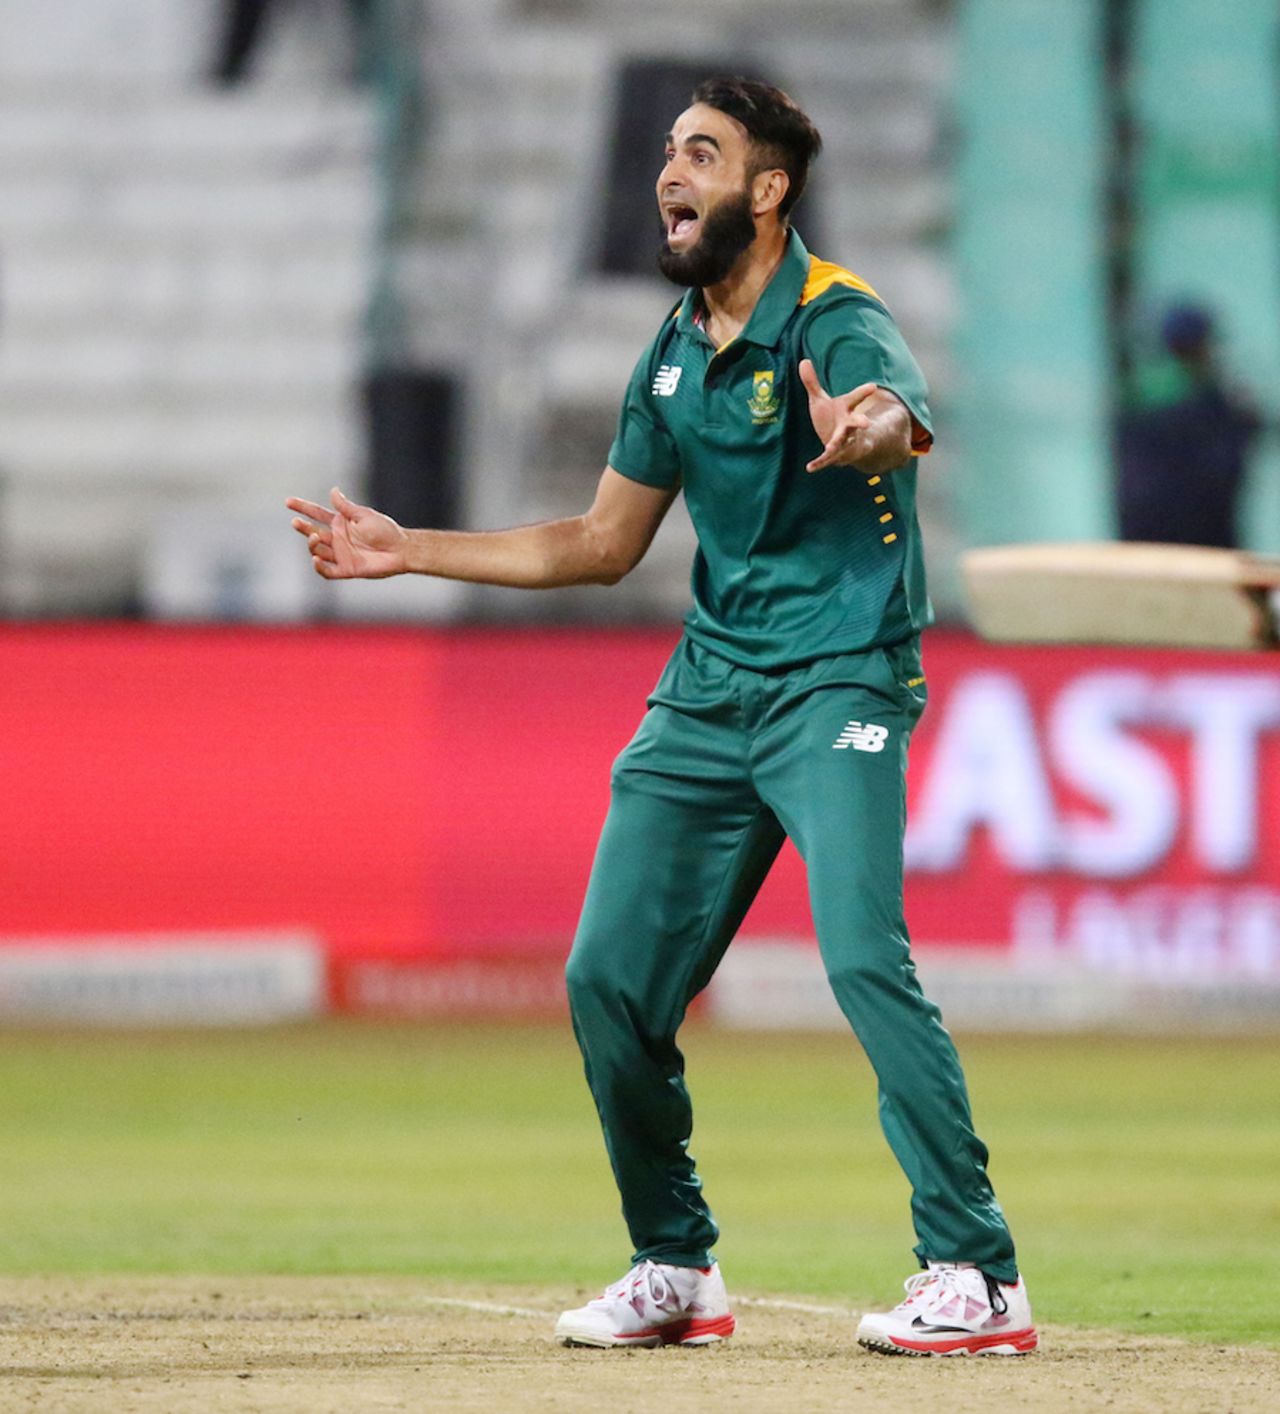 Imran Tahir reacts after having Doug Bracewell caught, South Africa v New Zealand, 3rd ODI, Durban, August 26, 2015